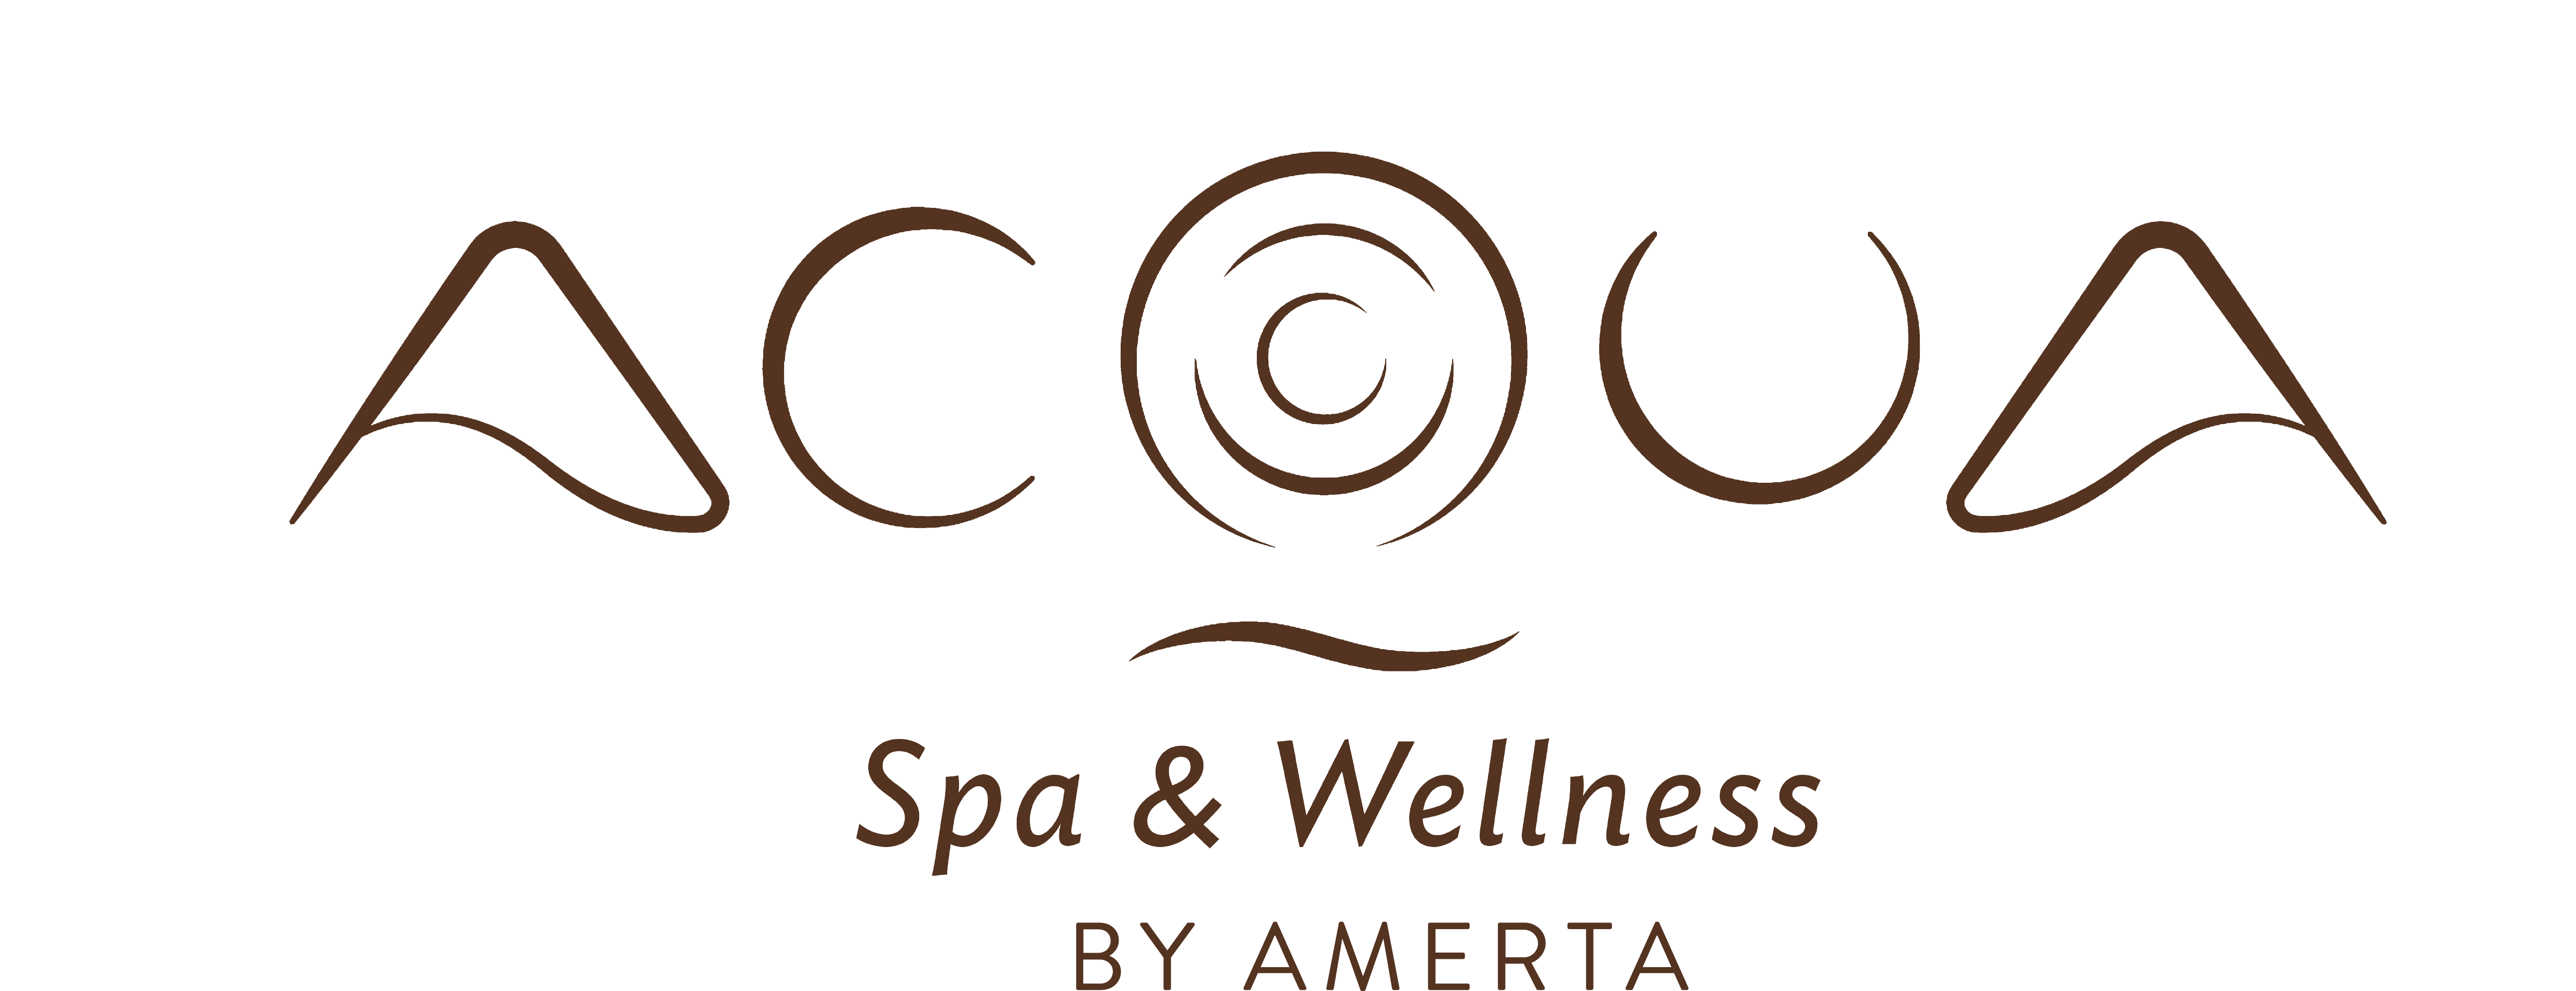 Acqua Spa & Wellness